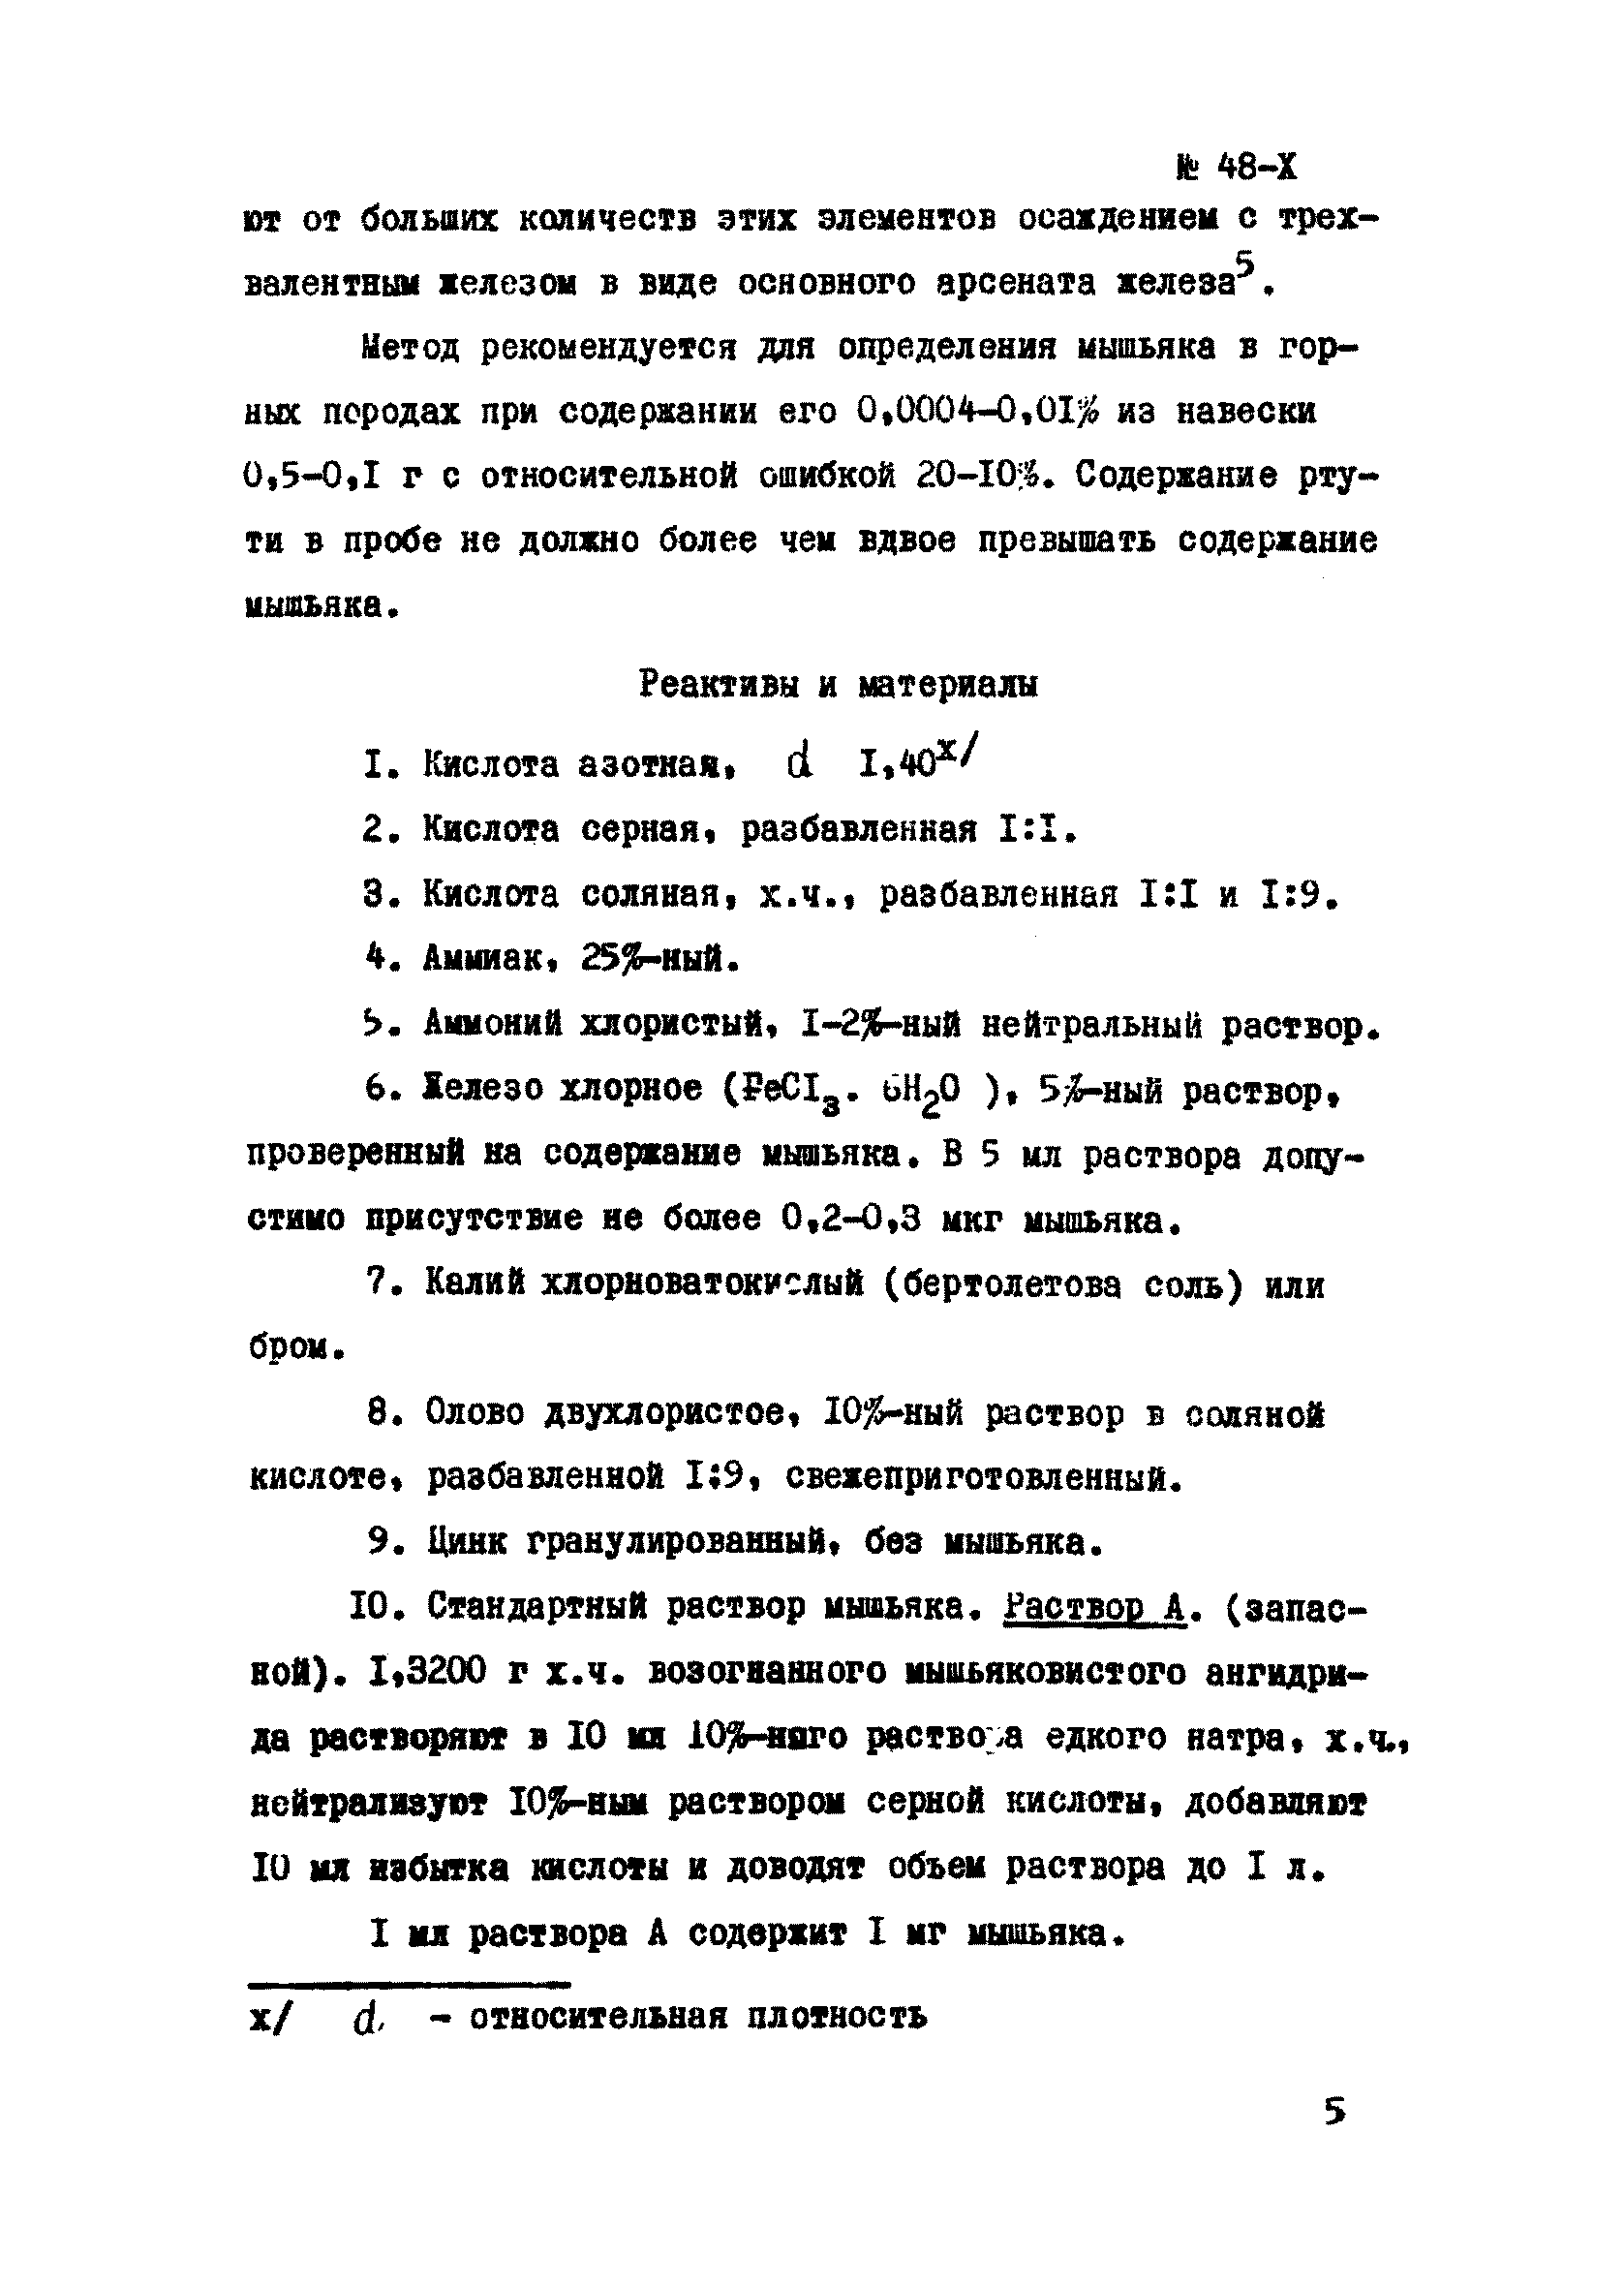 Инструкция НСАМ 48-Х